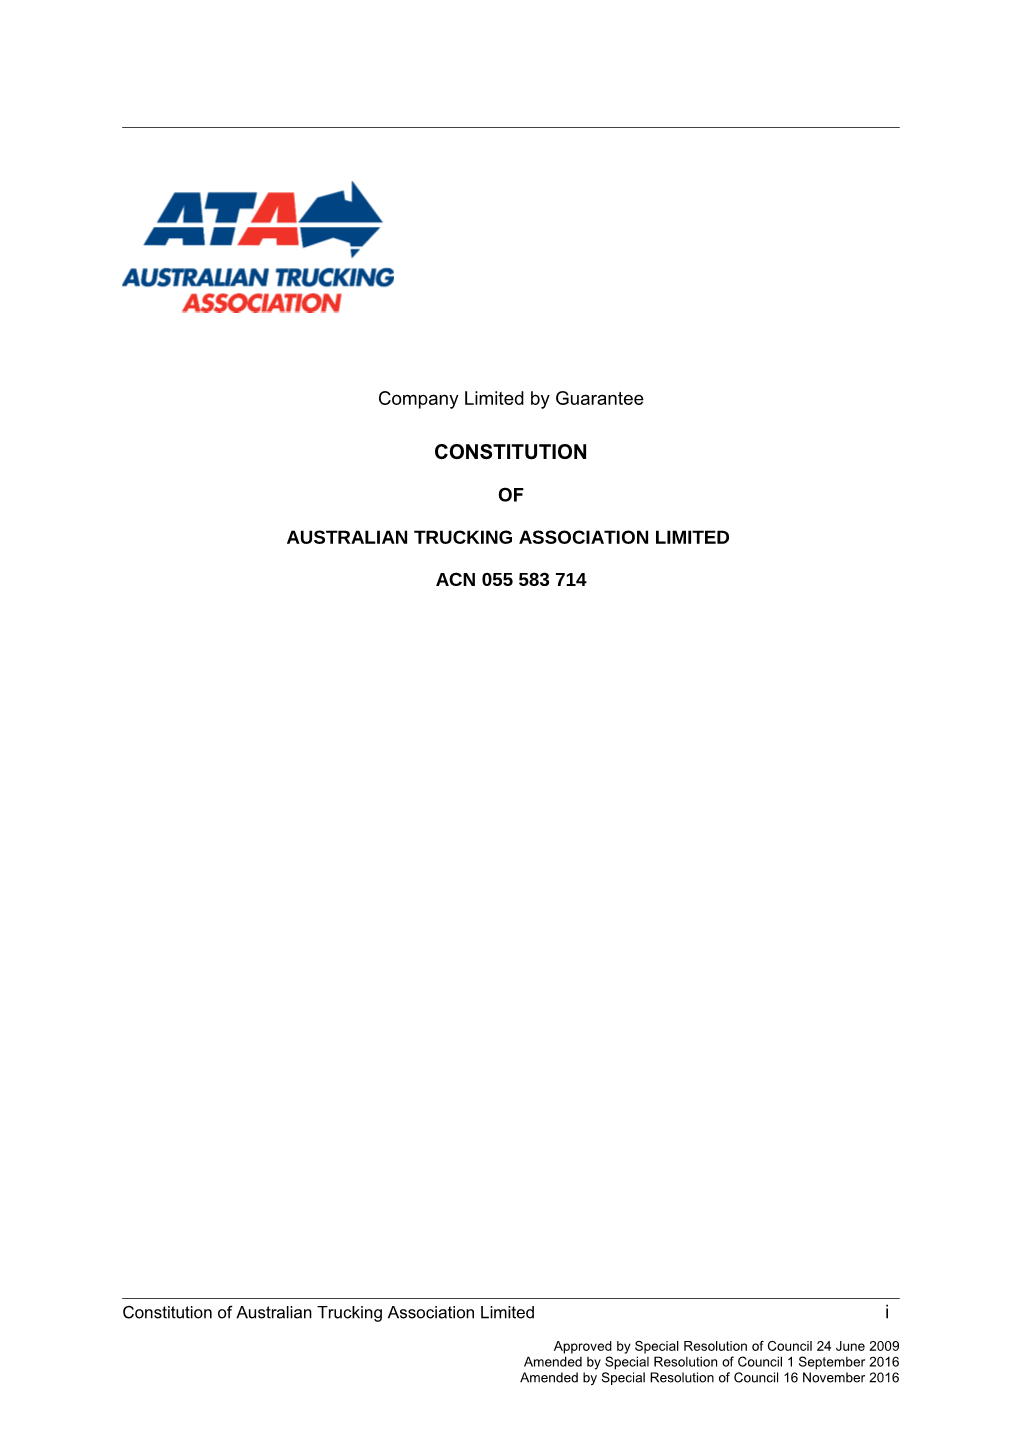 Australian Trucking Association Limited